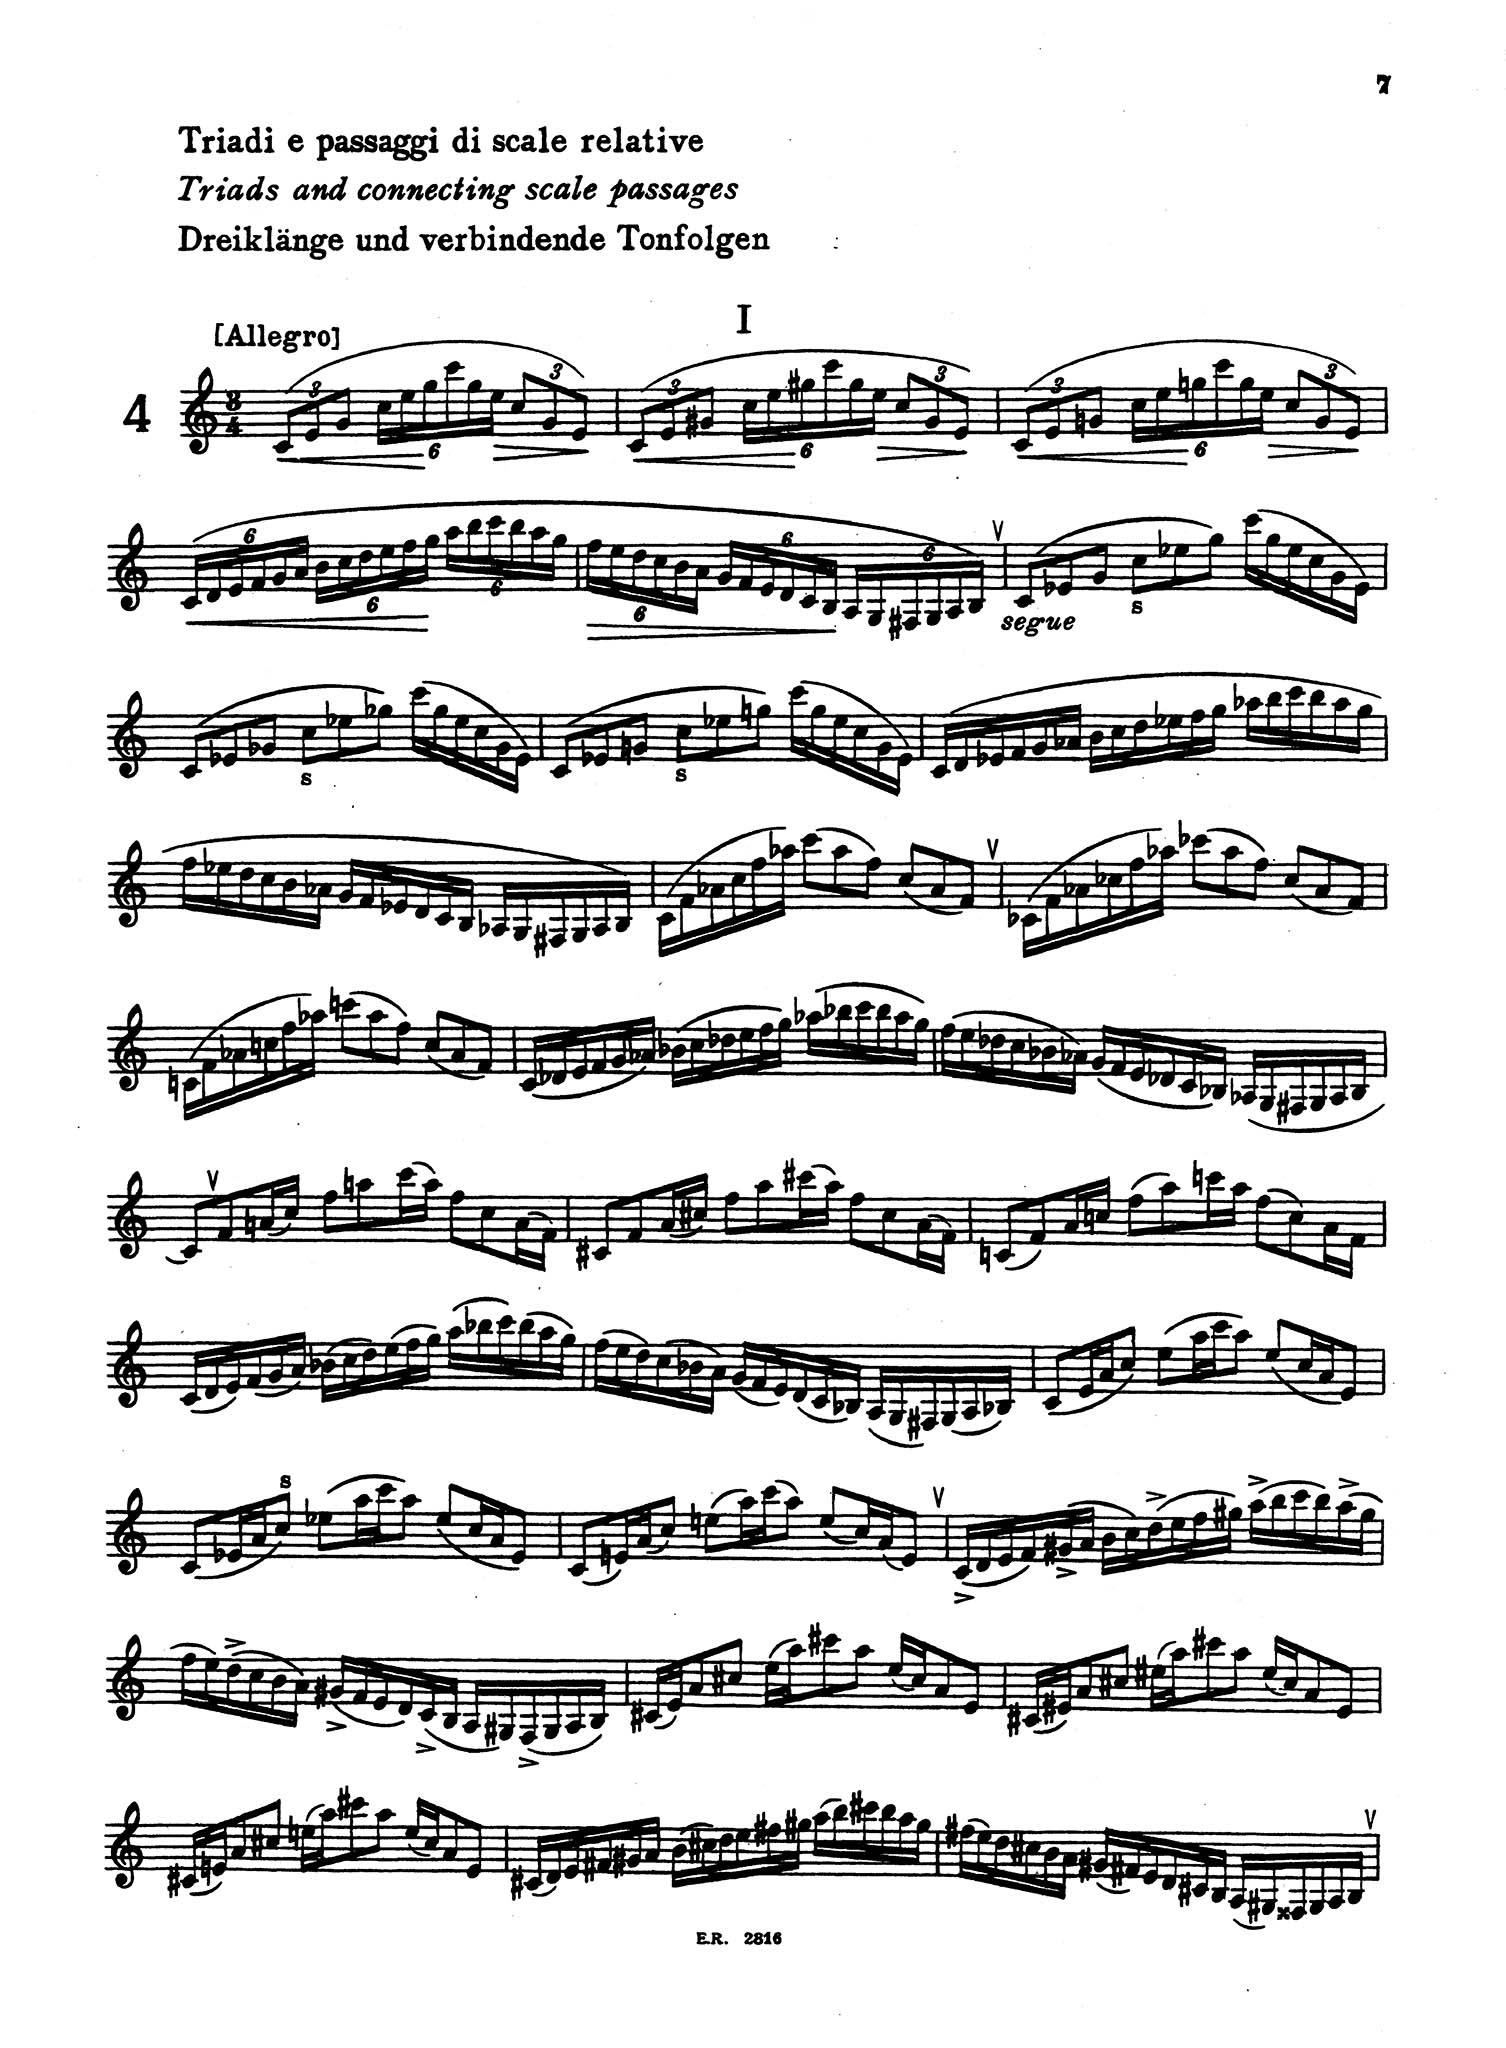 Arpeggio Studies for Clarinet - Page 7